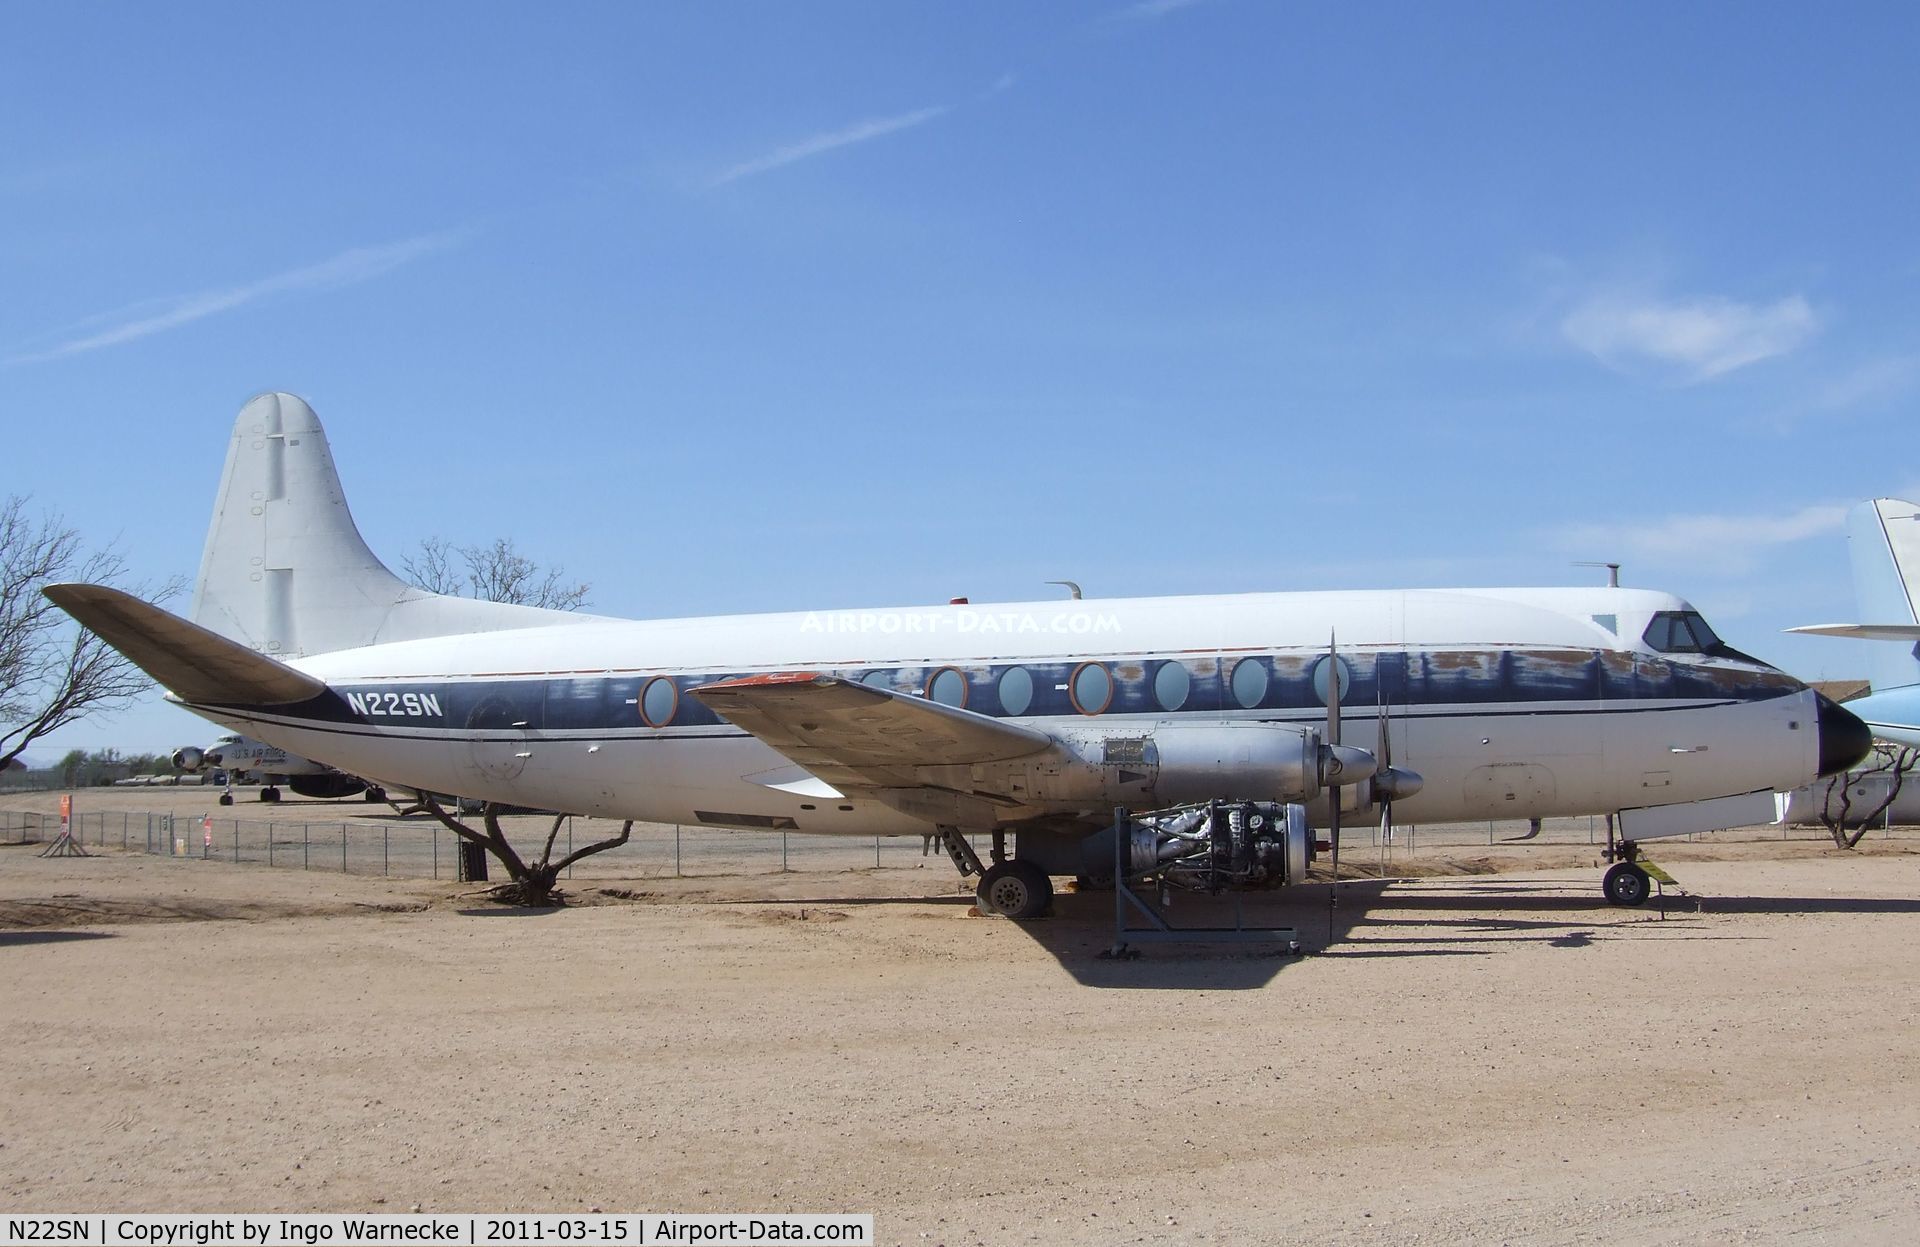 N22SN, 1954 Vickers Viscount 724 C/N 40, Vickers Viscount 744 at the Pima Air & Space Museum, Tucson AZ